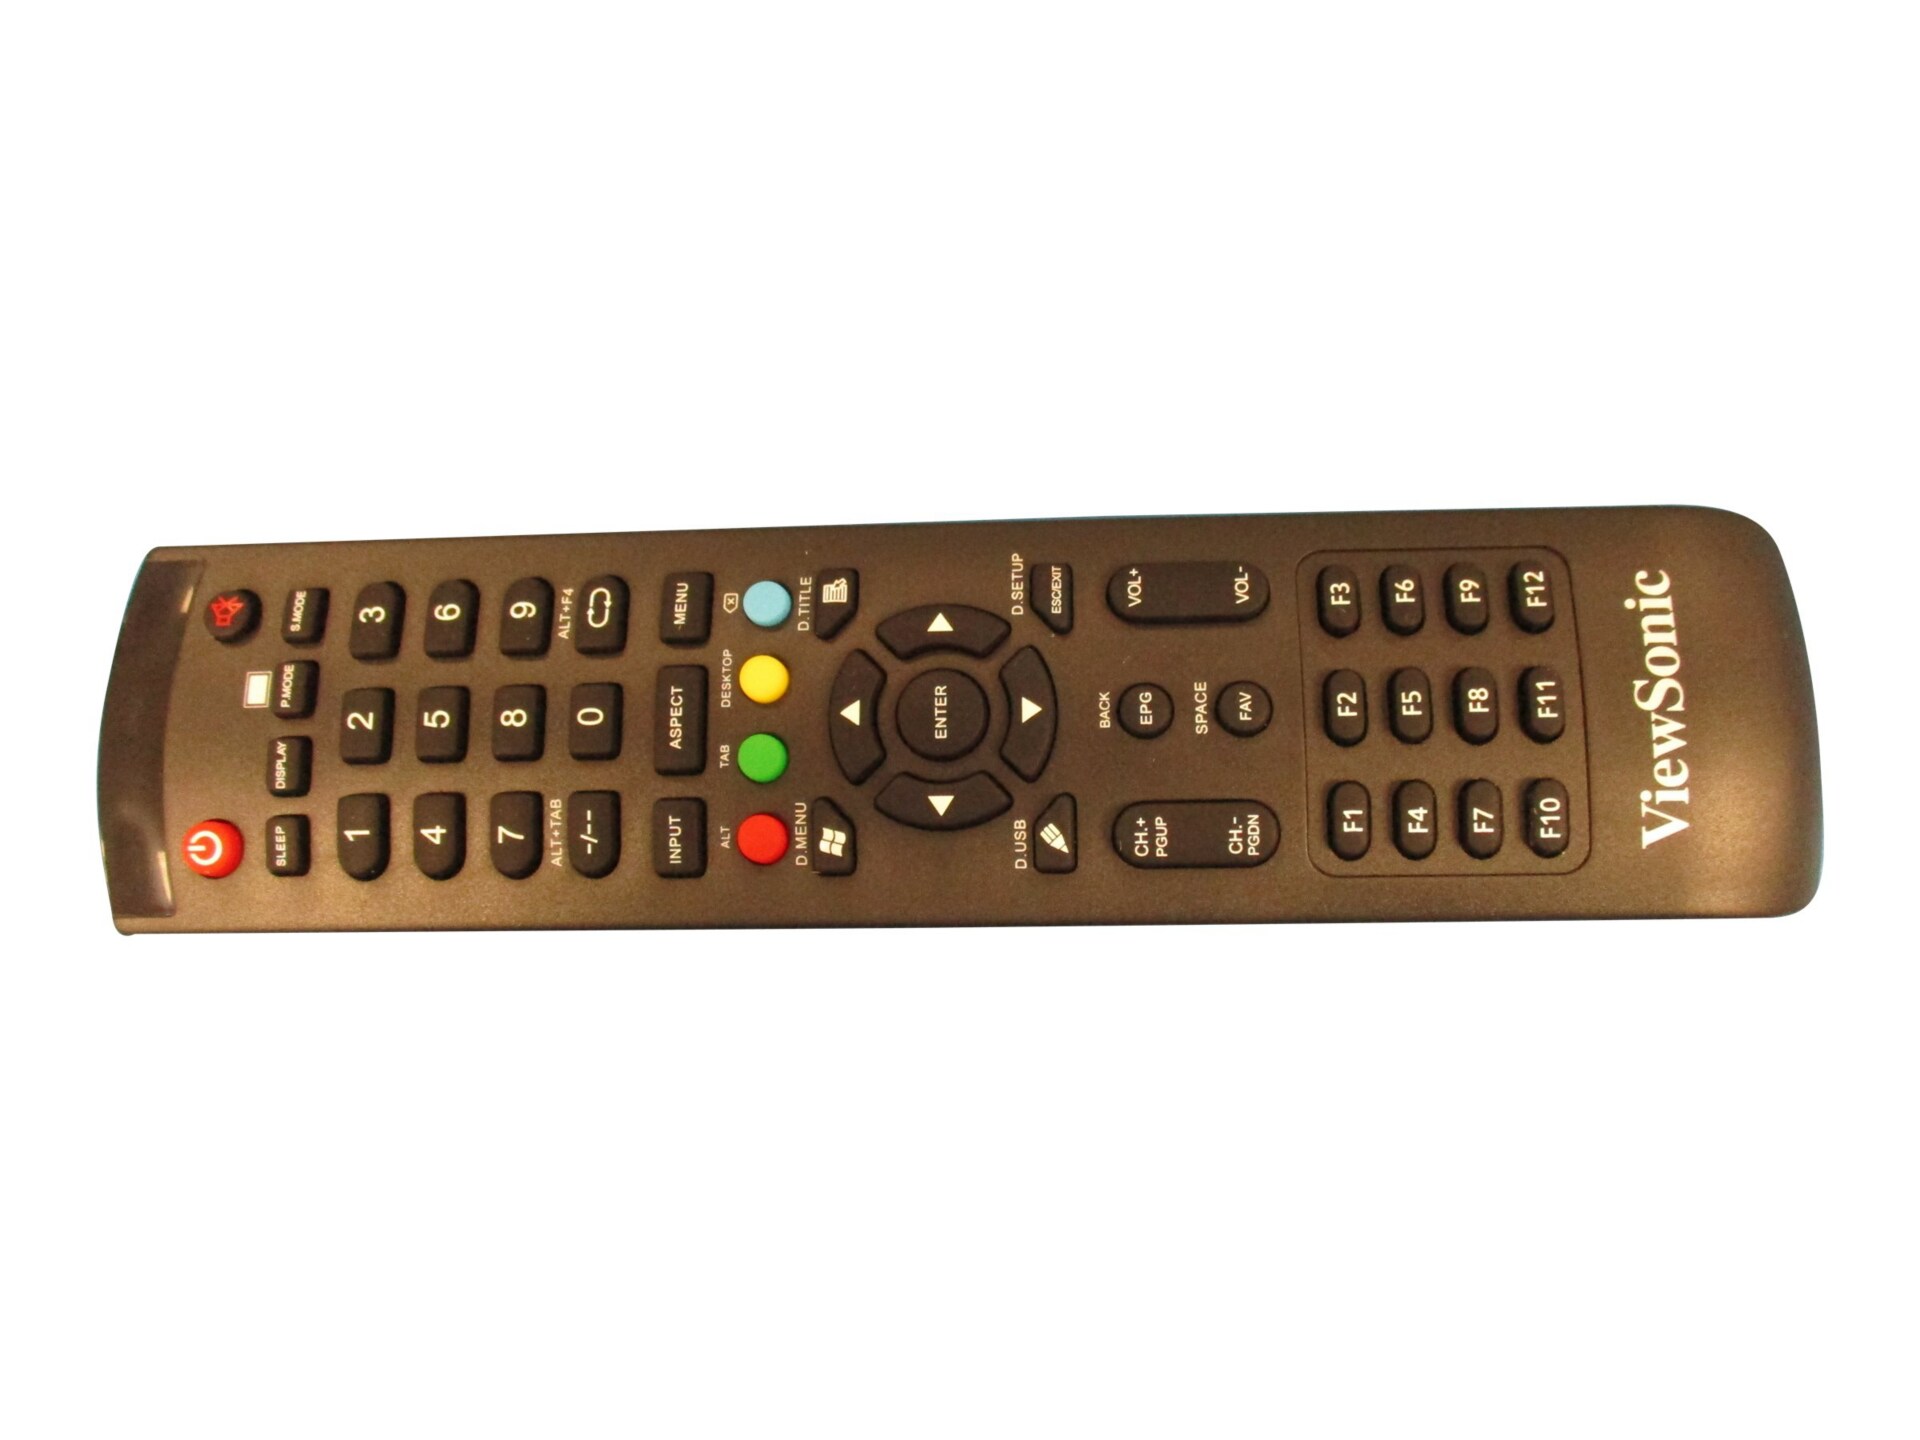 ViewSonic remote control